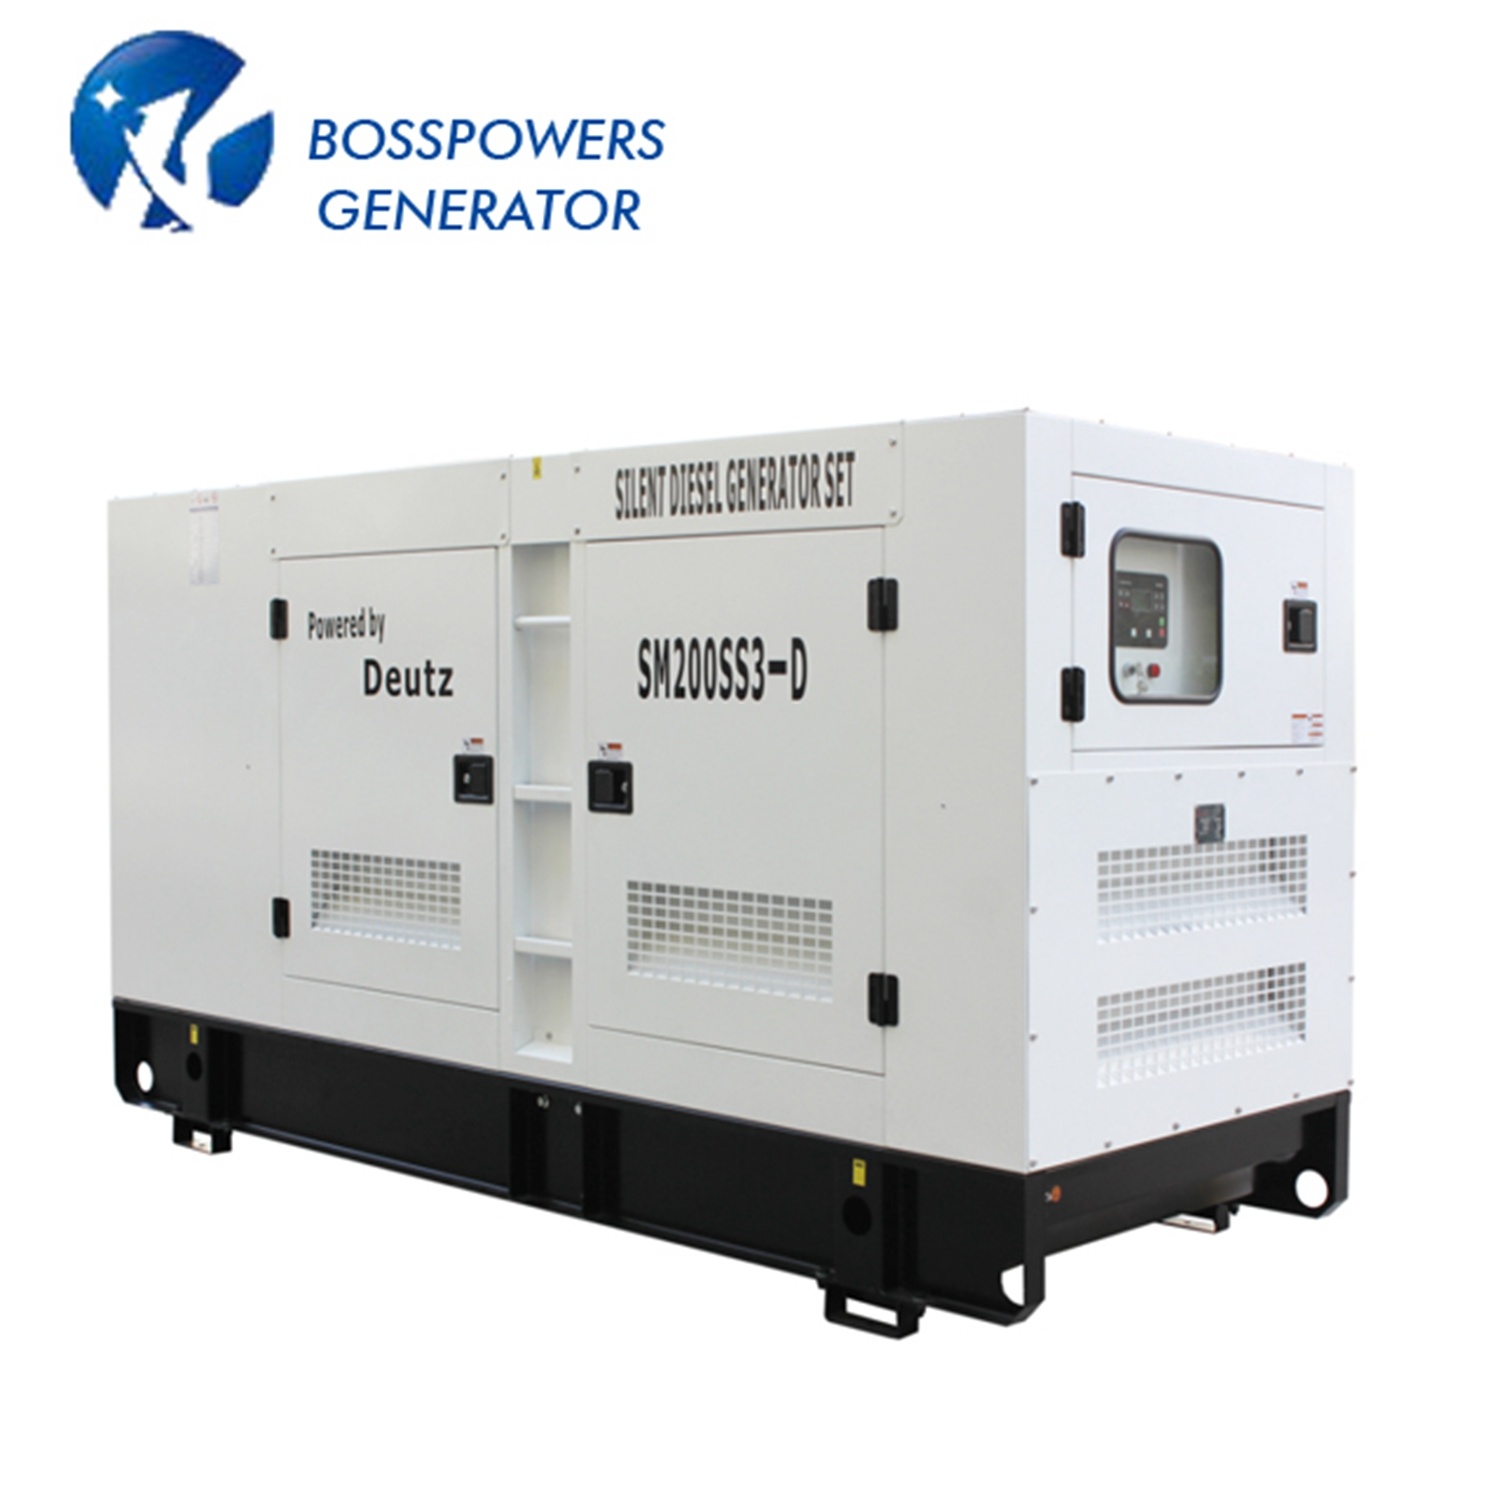 18kVA 60Hz Soundproof Electrical Home Use Power Generator Diesel Genset